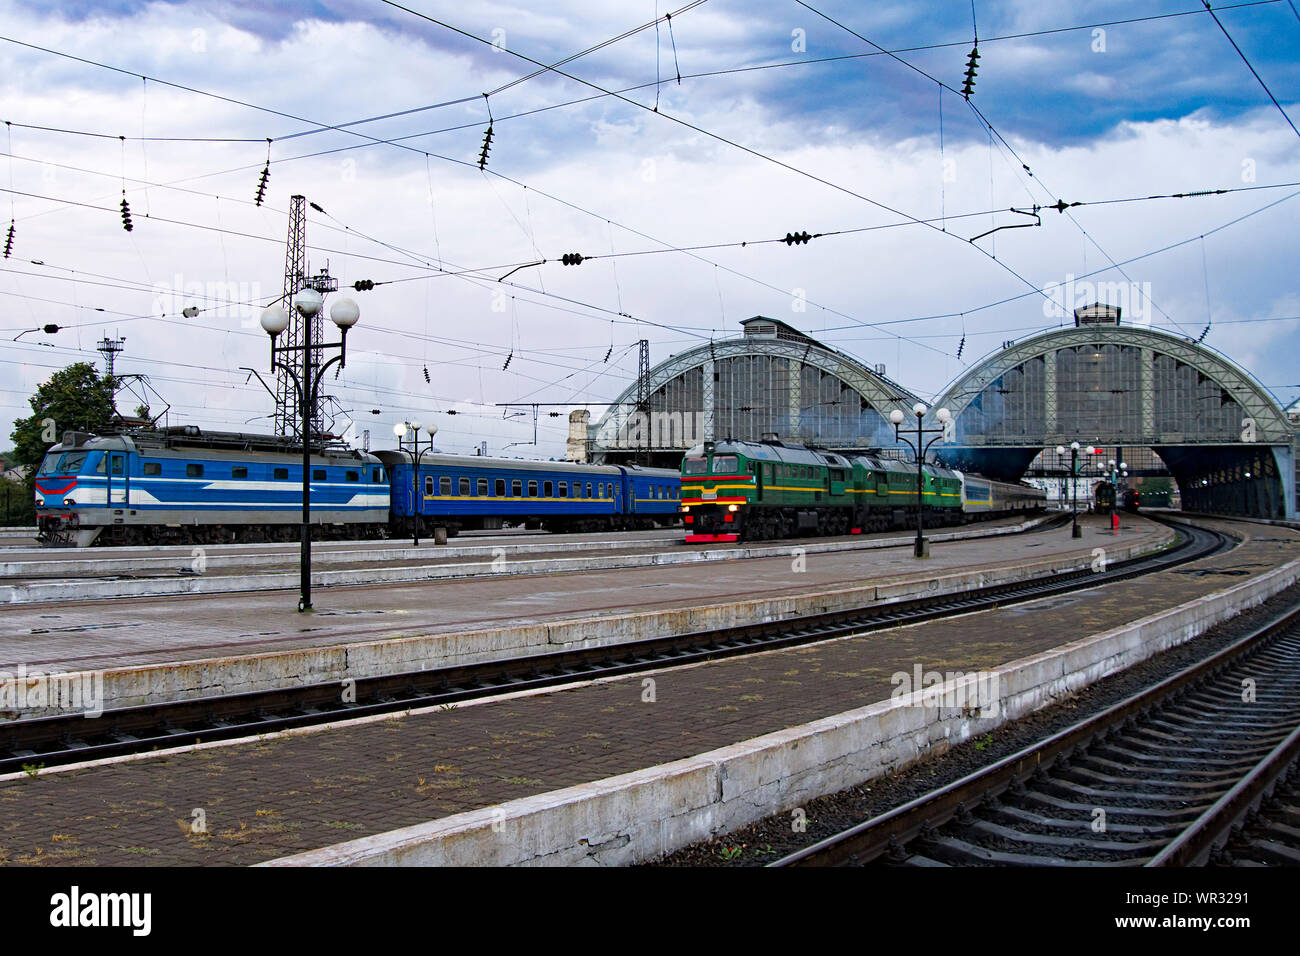 train at railway station. platform. travel concept Stock Photo